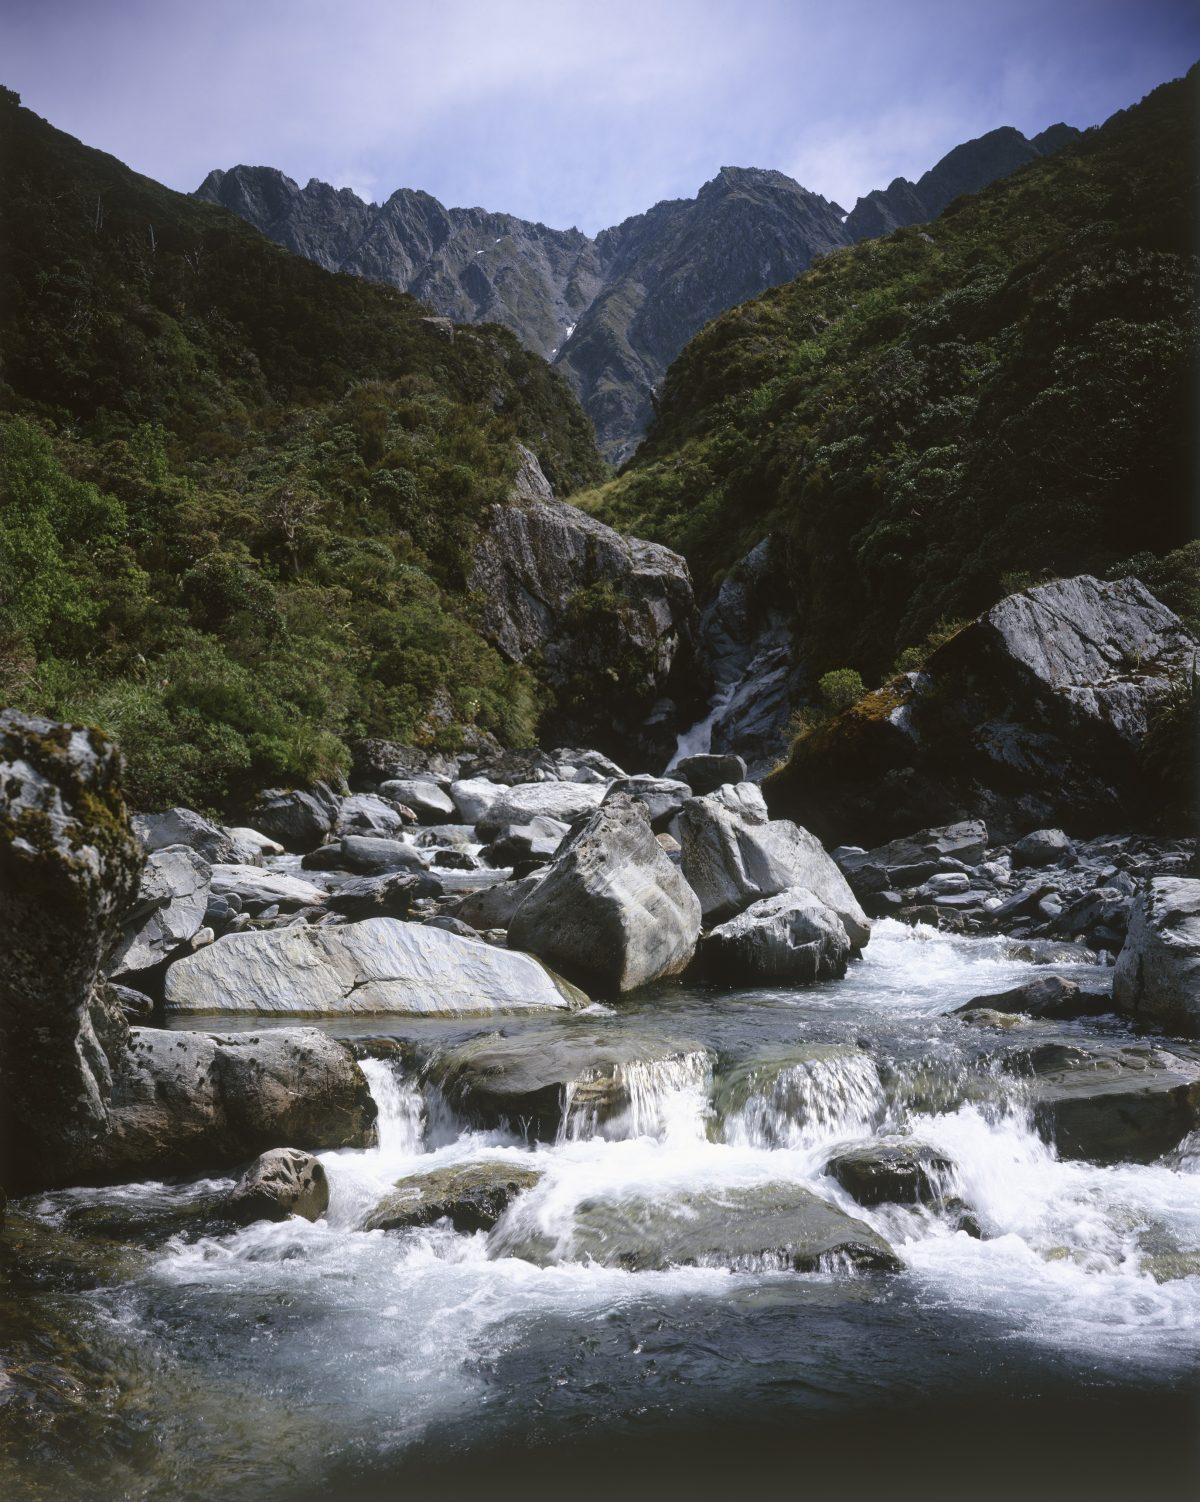 The Arahura River on New Zealand's South Island is one of the greenstone waters where pounamu can be found. (Jan Nauta/Museum of New Zealand Te Papa Tongarewa)